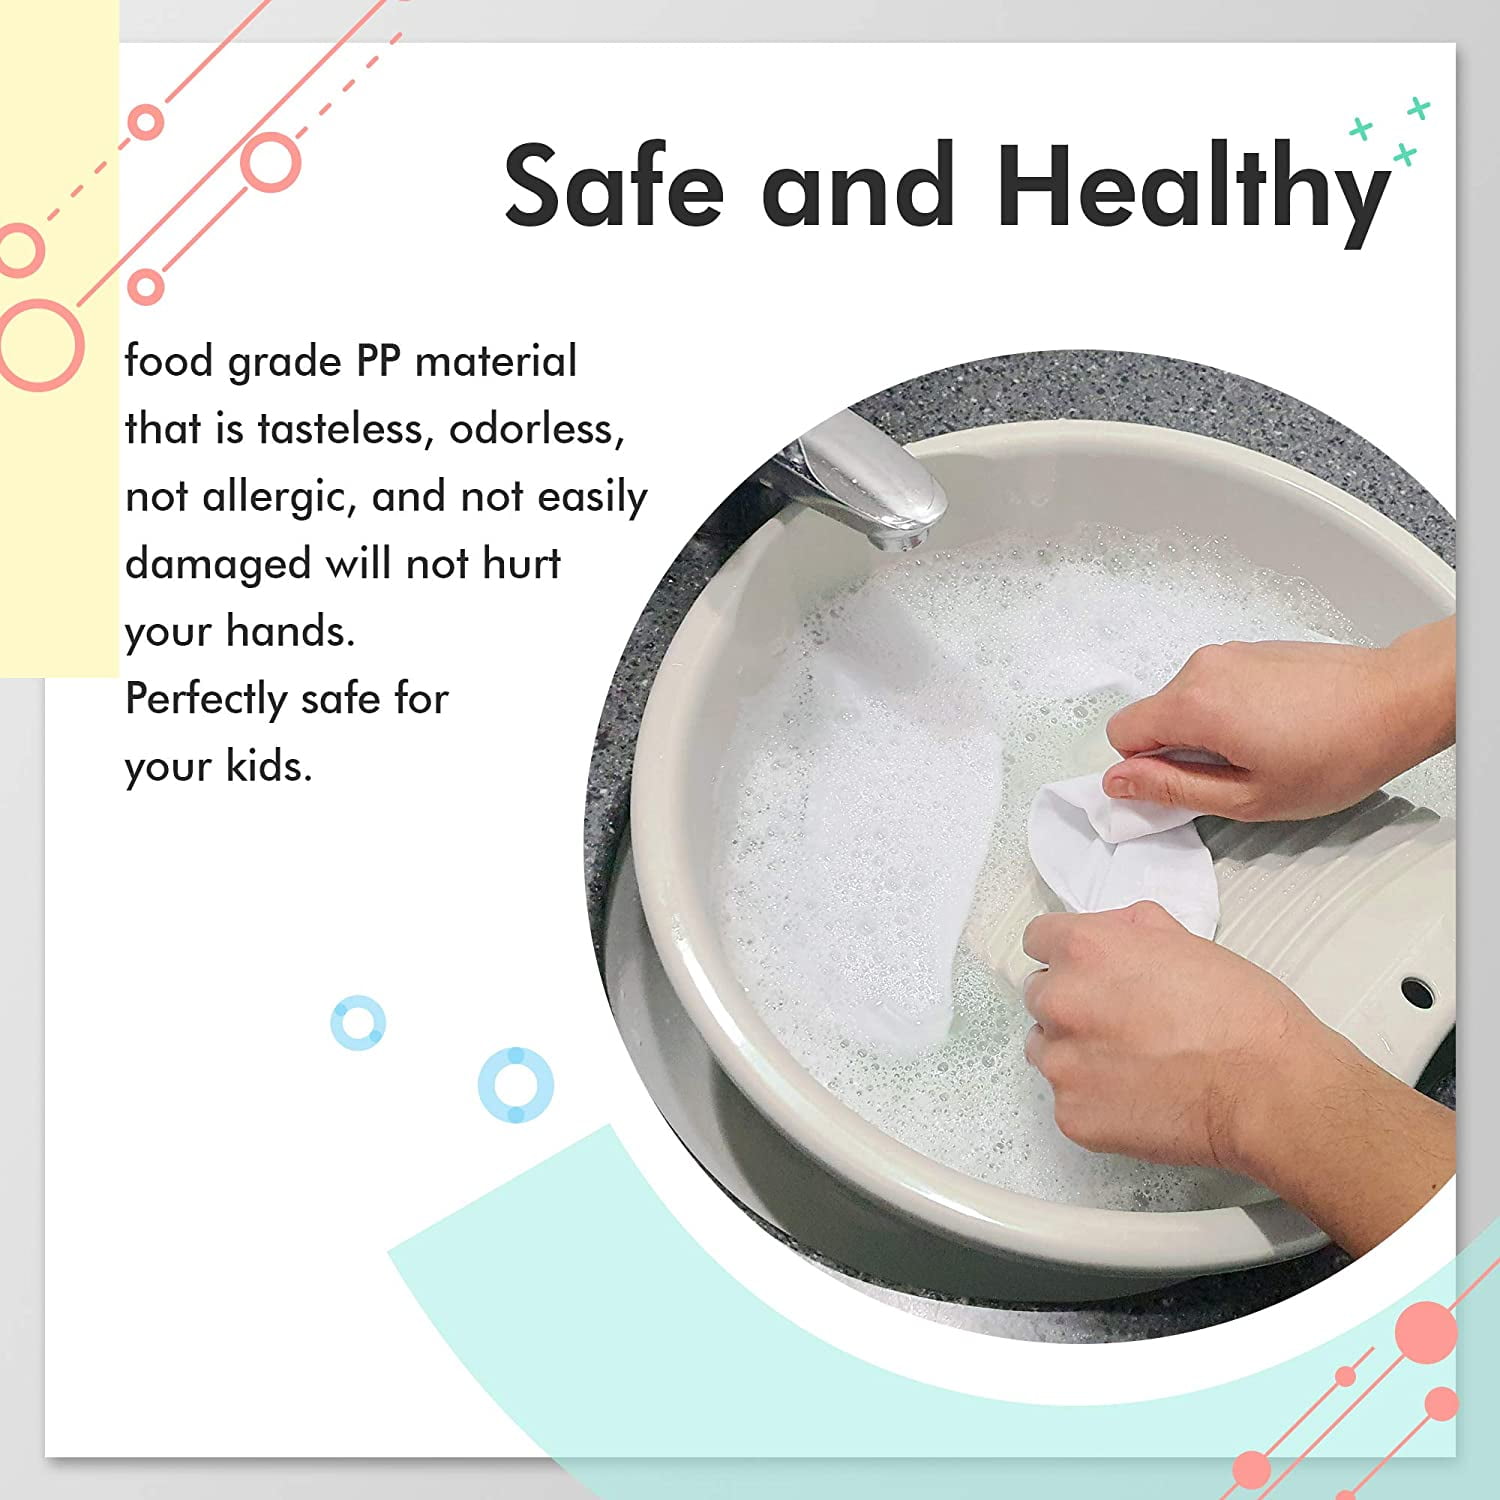 Washboard Washing Clothes Hand Wash Board Bucket Basin For Laundry Lime